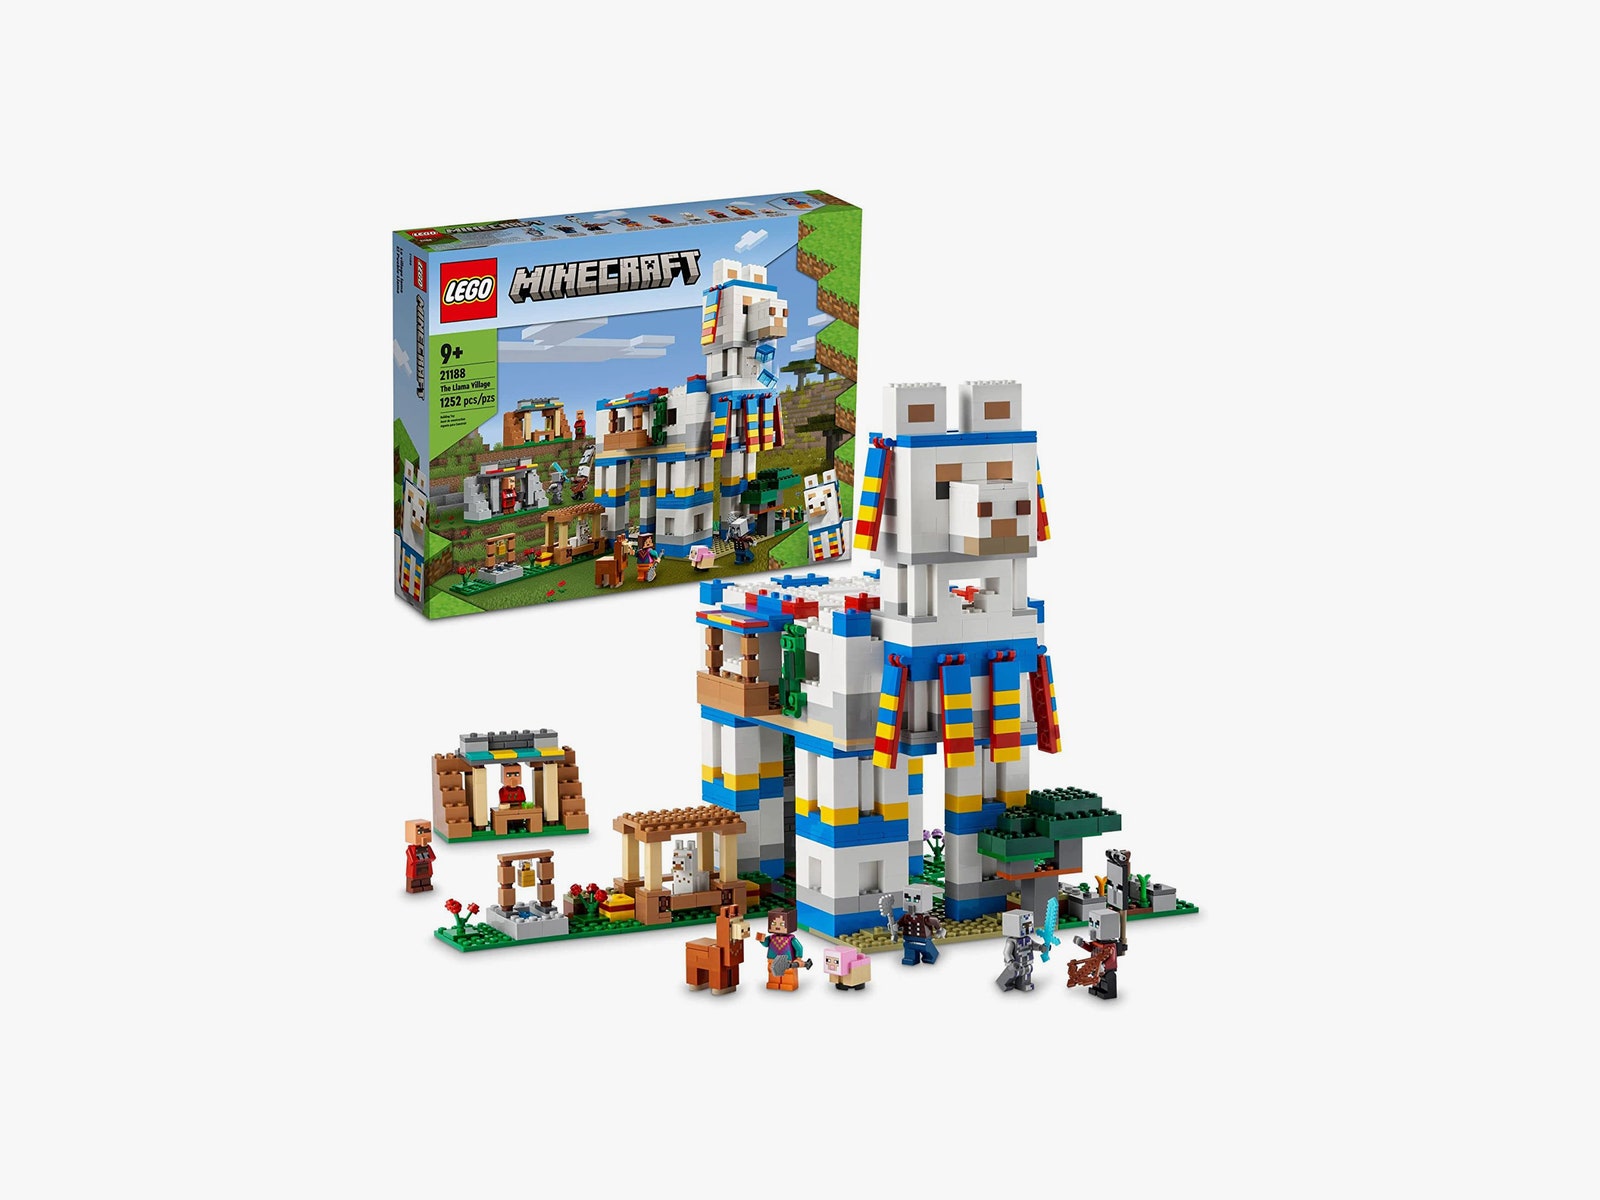 LEGO Minecraft Llama Village set